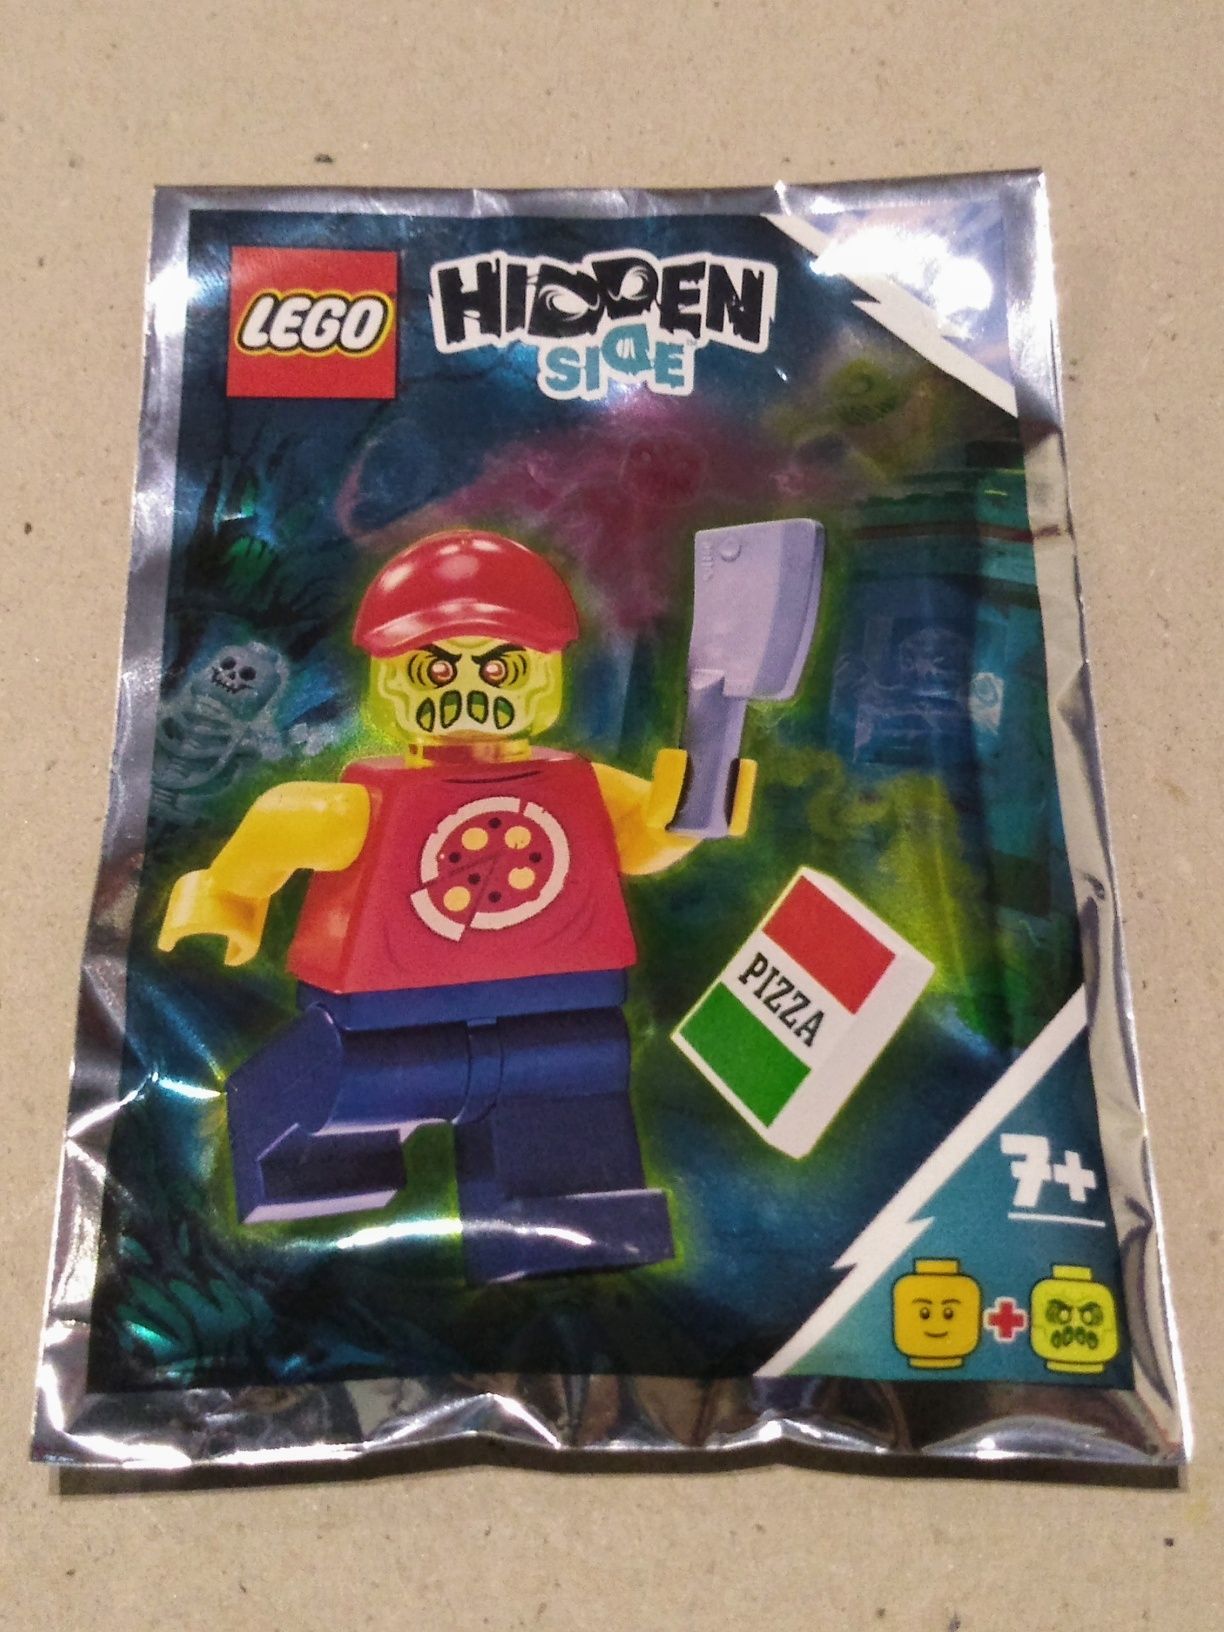 Figurka LEGO hidden side dostawca